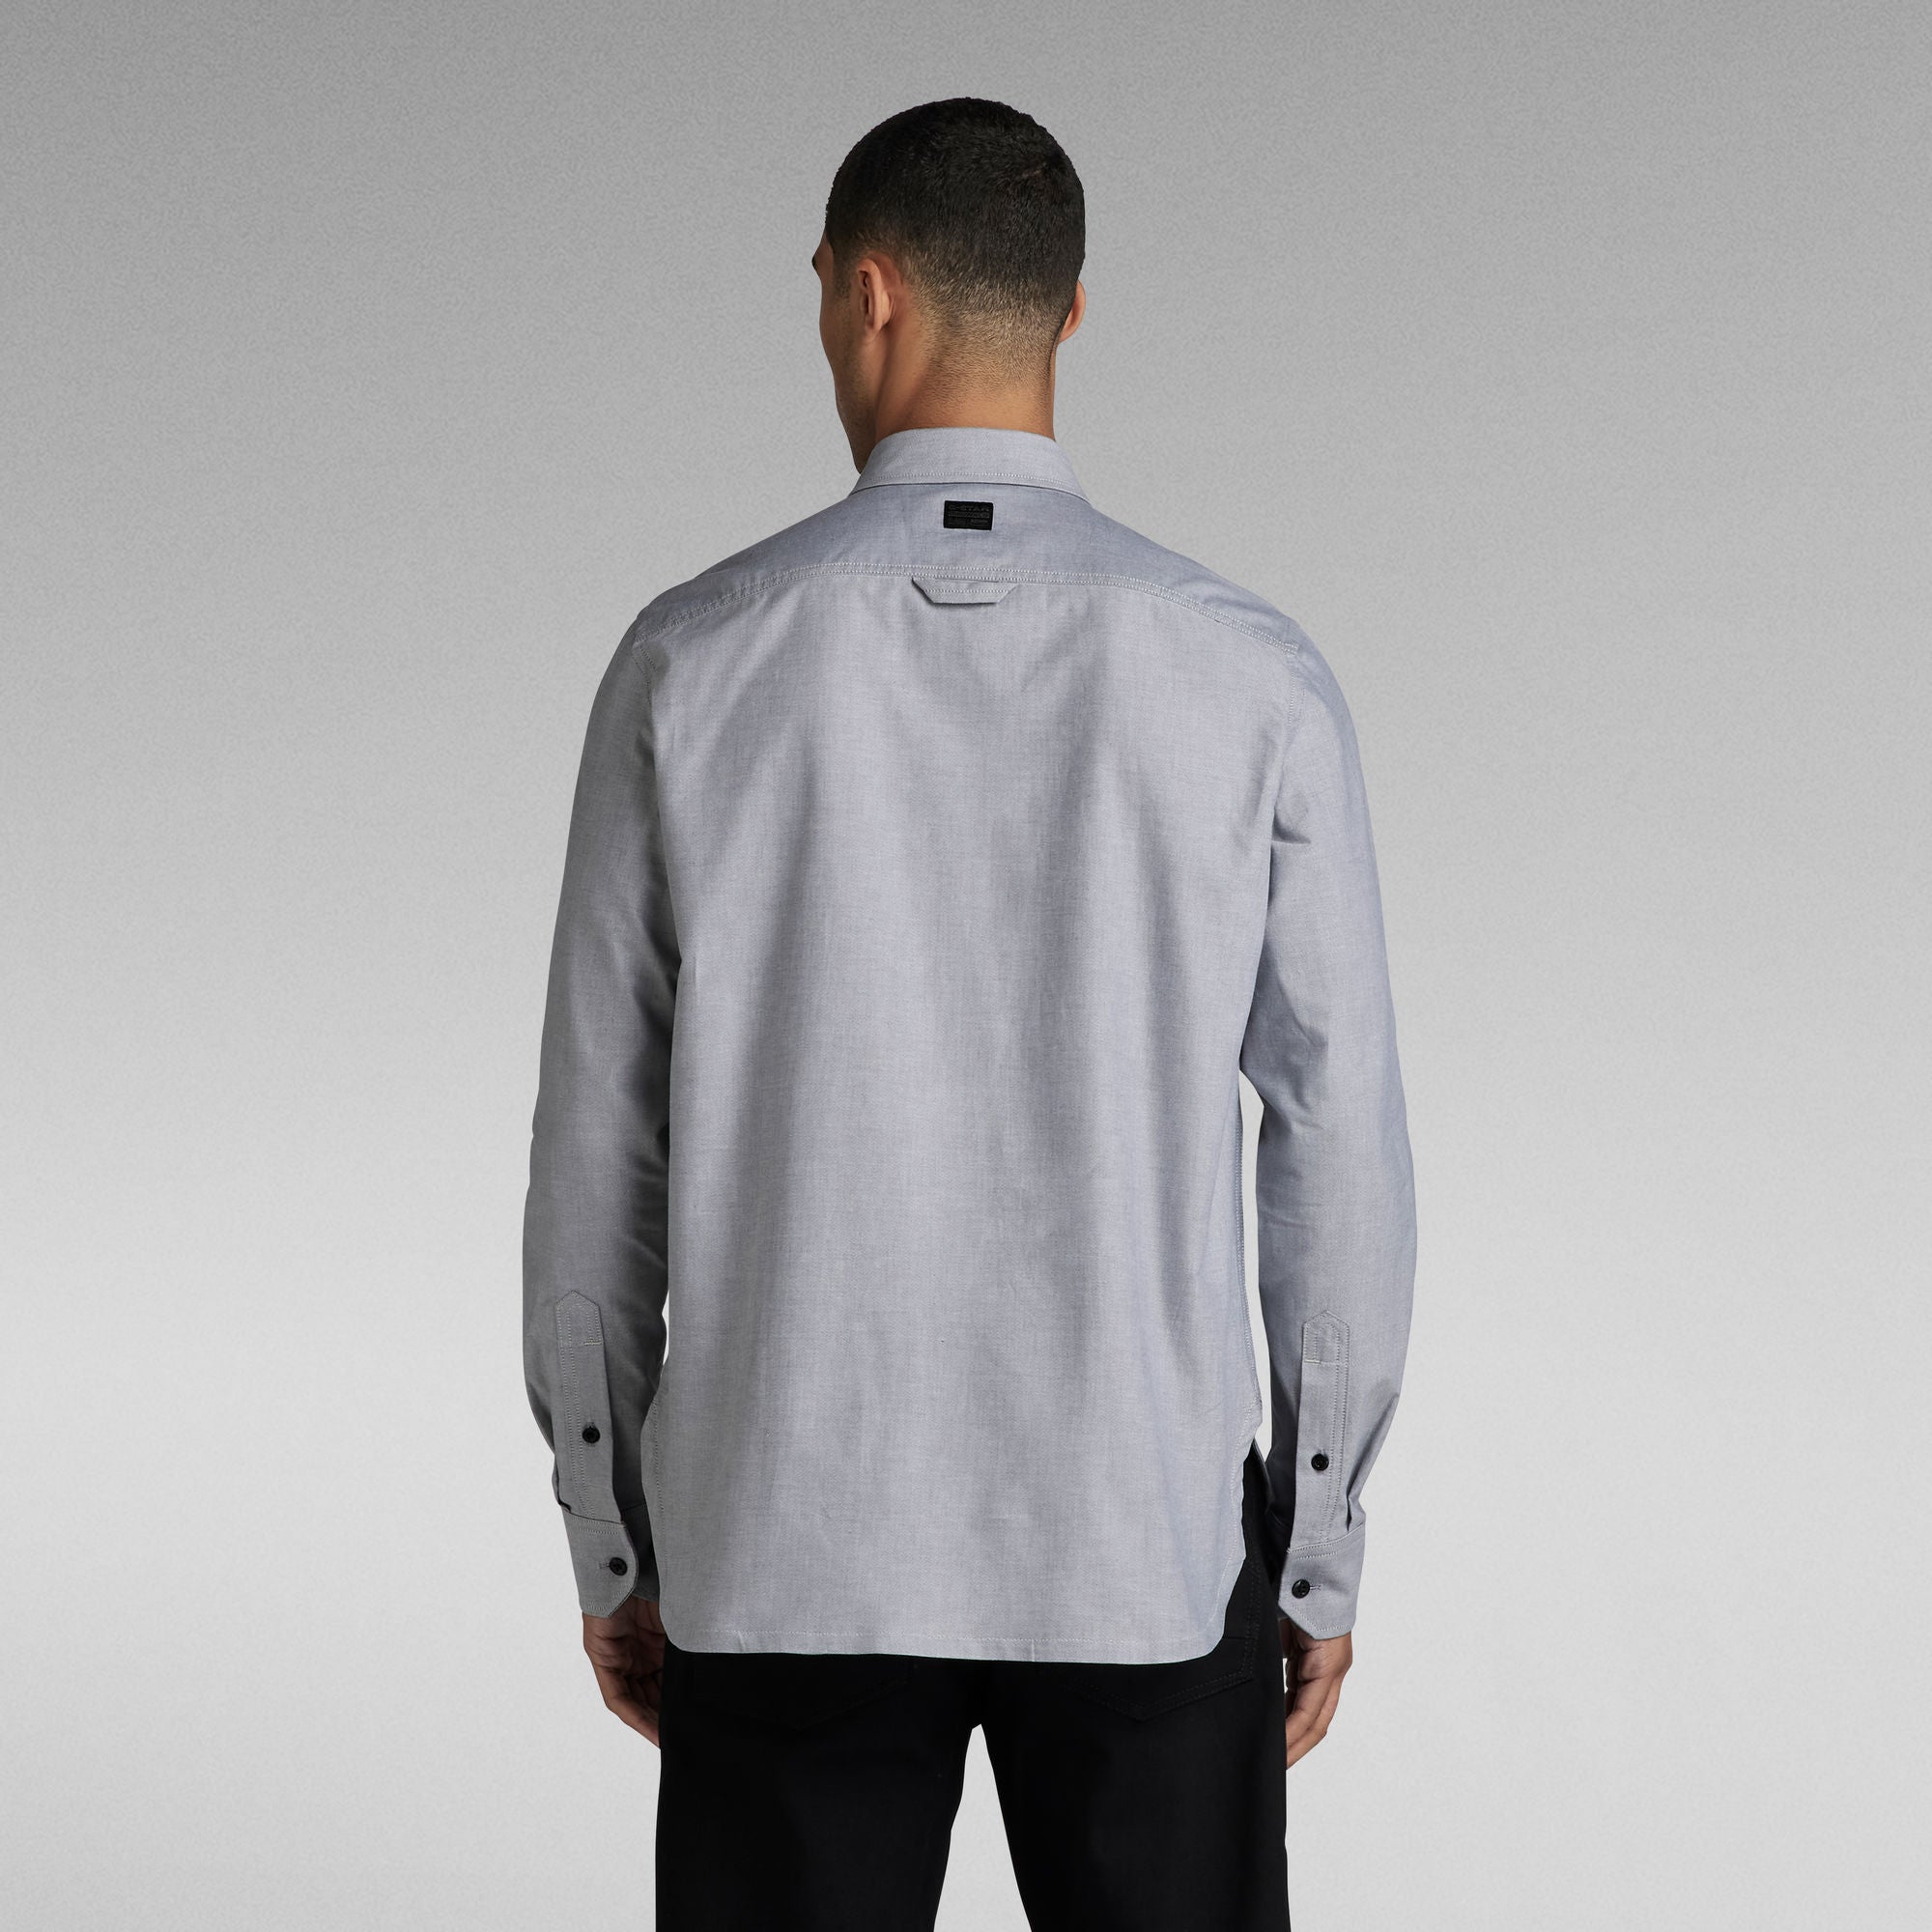 G-Star Raw - CPO Regular LS Shirt - Correct Grey/White Oxford